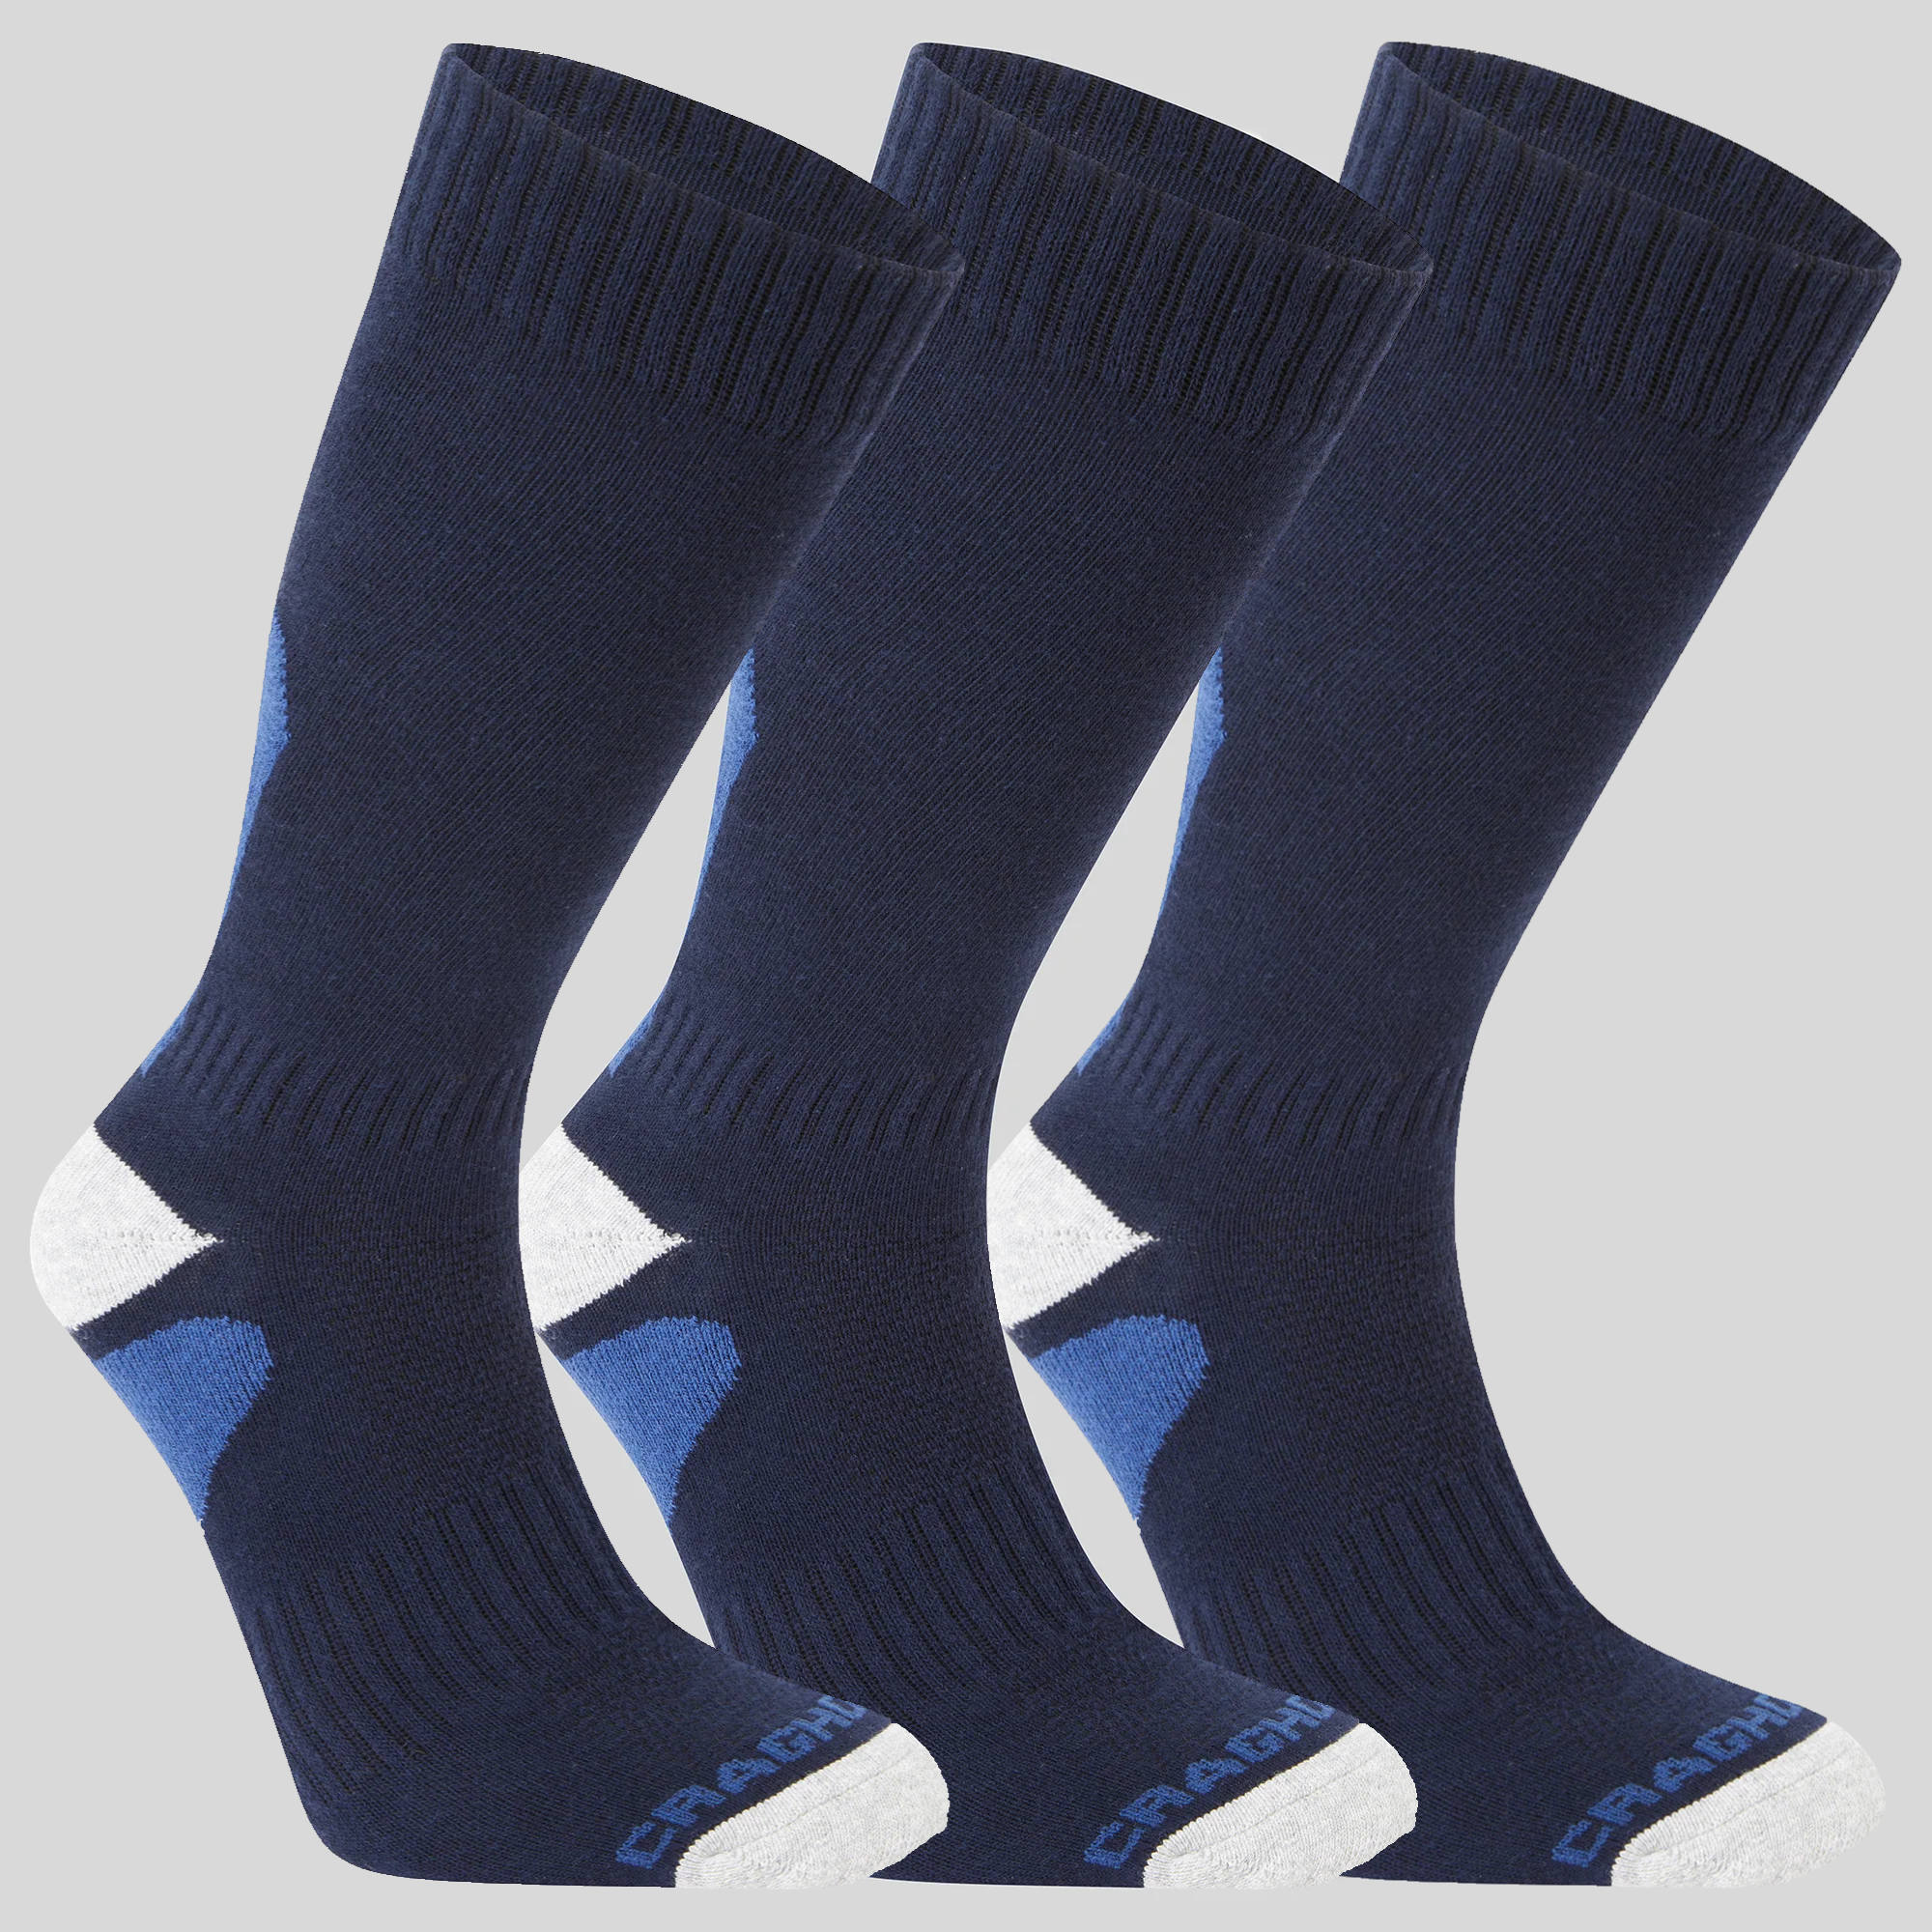 Unisex Insect Shield® Adventure Pro Socks 3-pack | Dark Navy